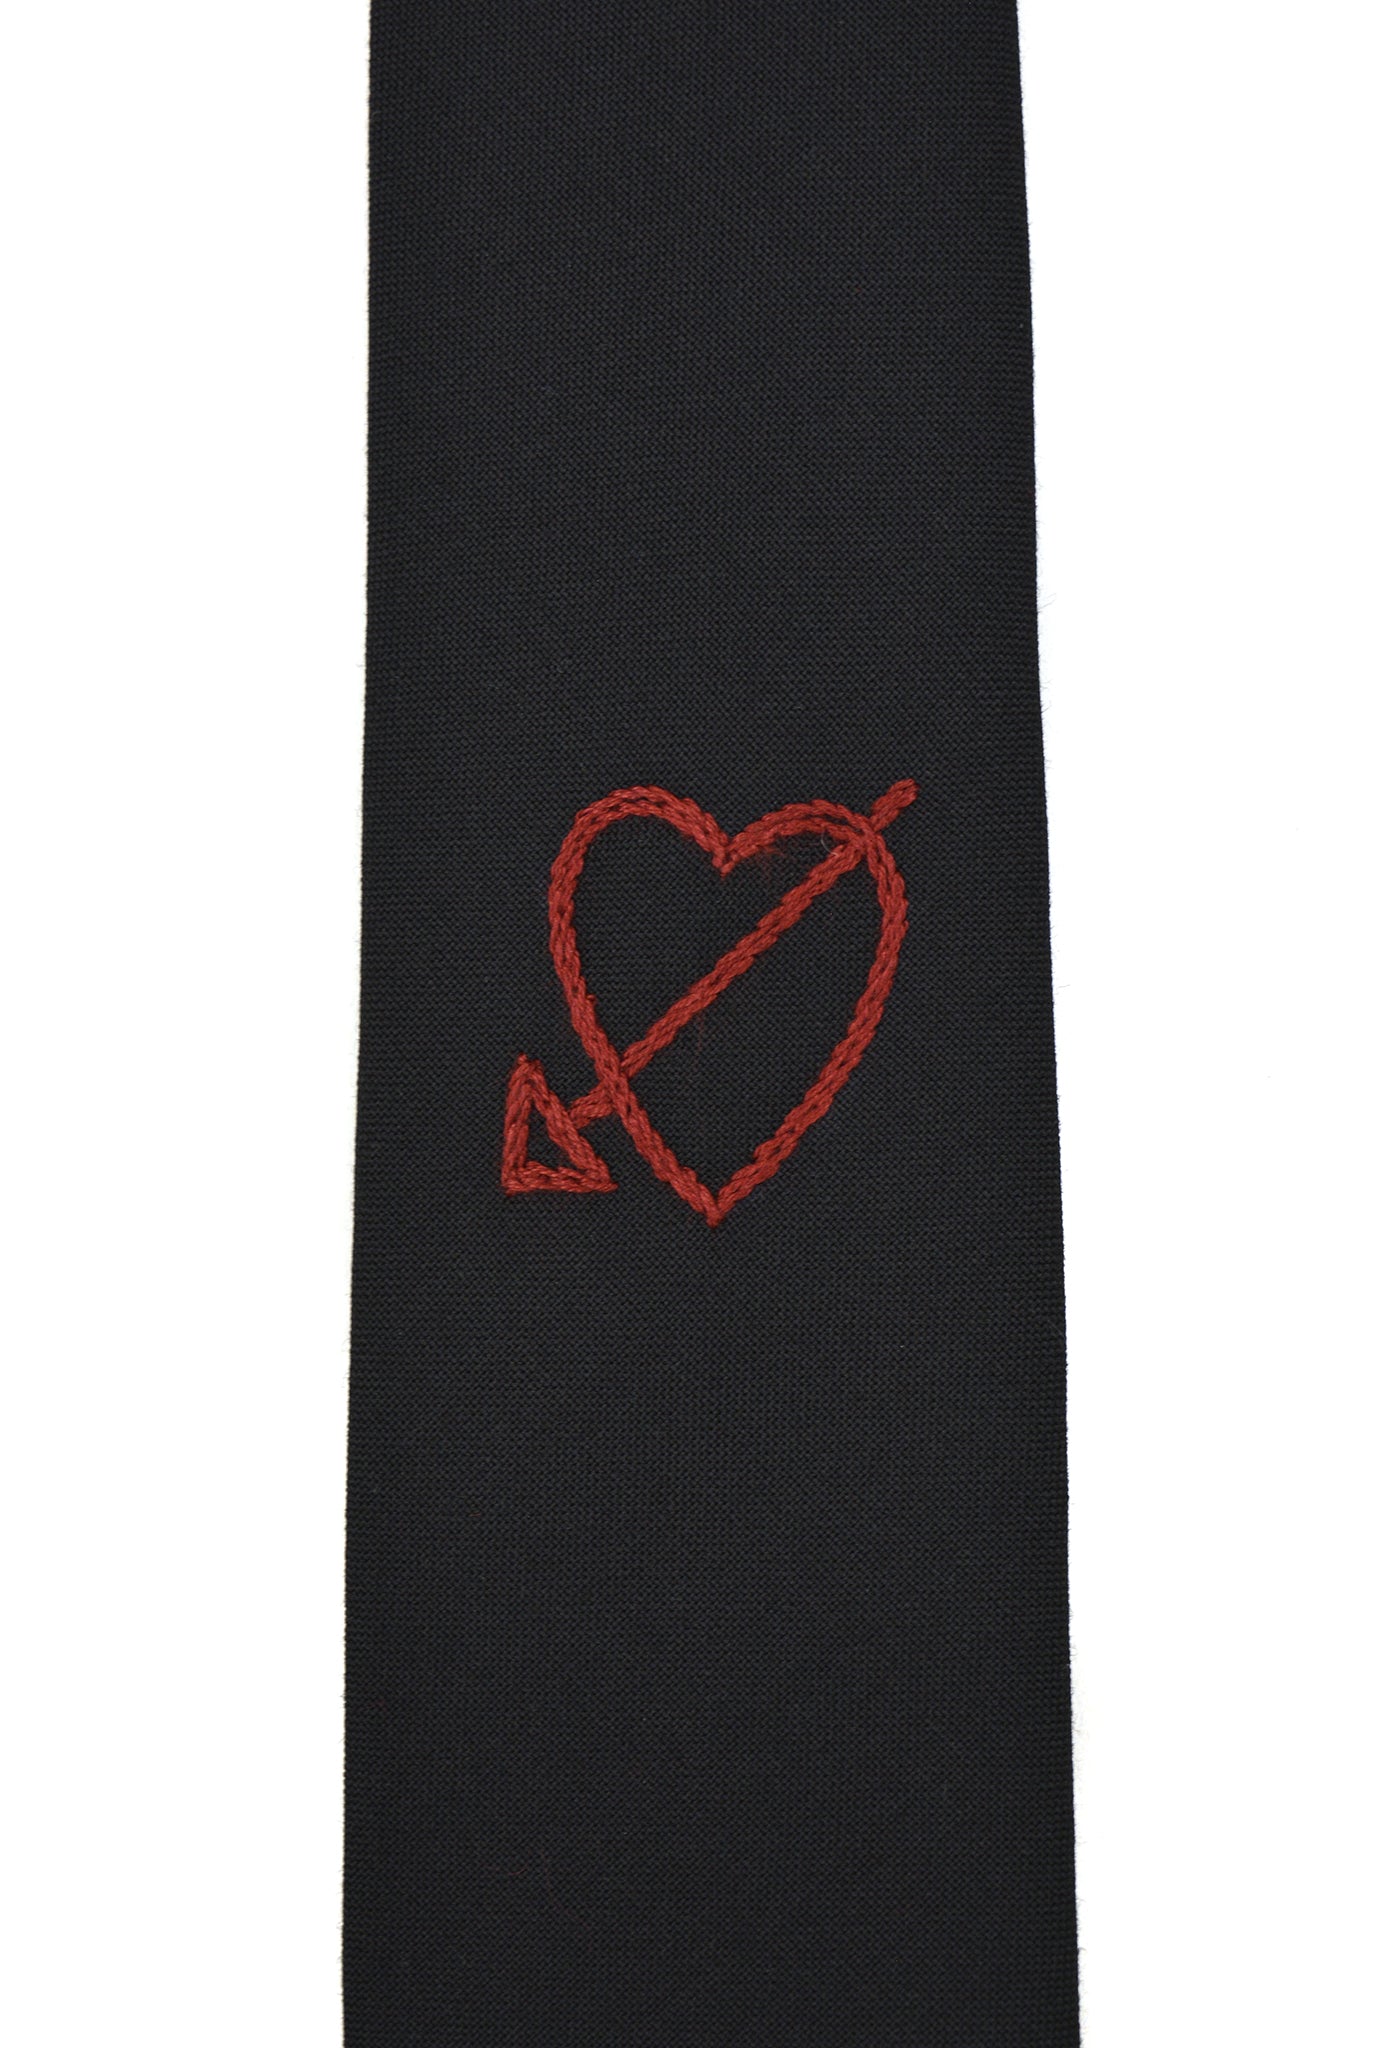 Ernest W. Baker Embroidered Tie